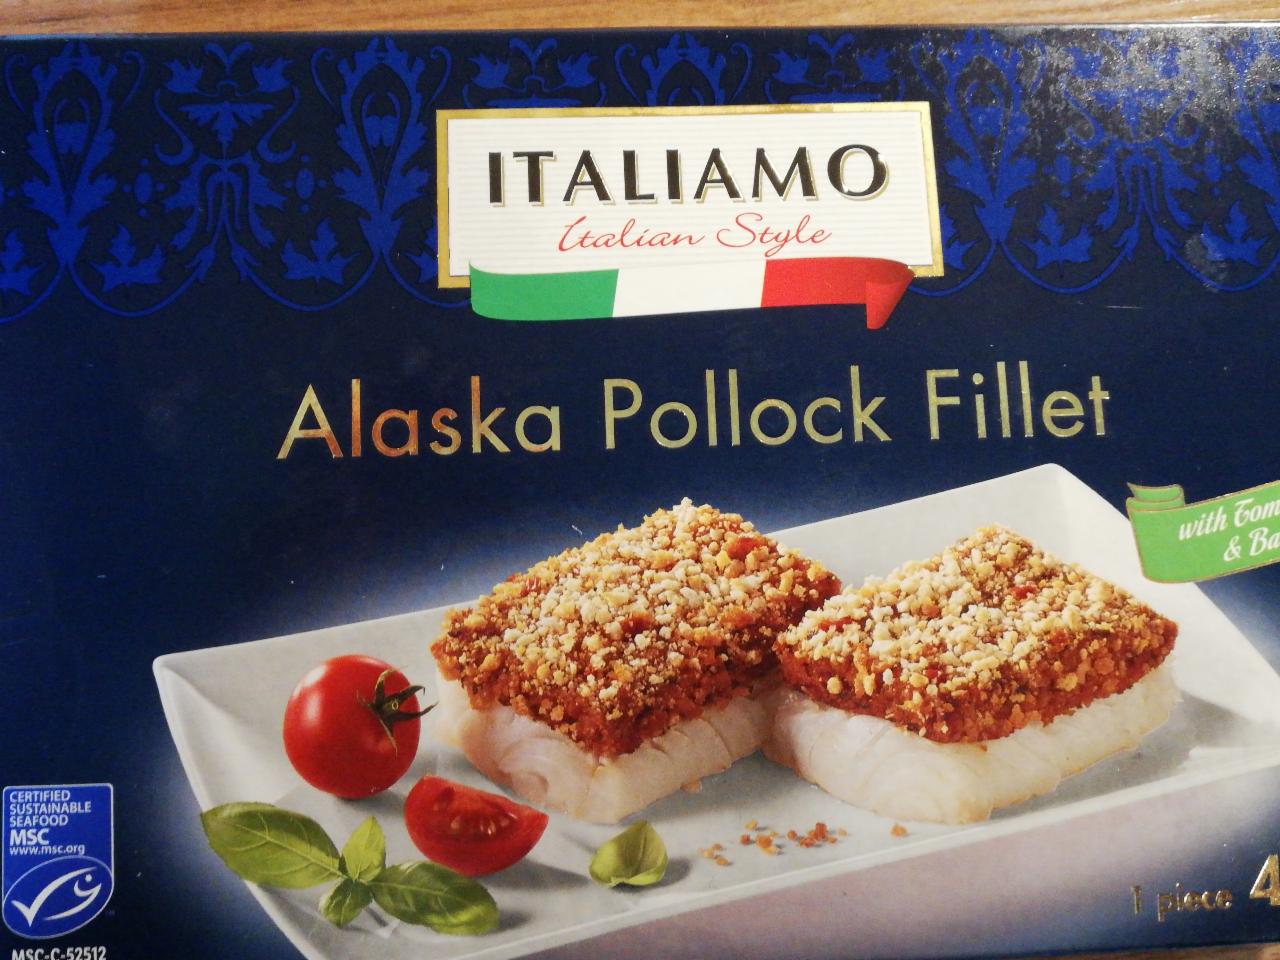 Fotografie - Alaska pollock fillet with Tomato & Basil Italiamo